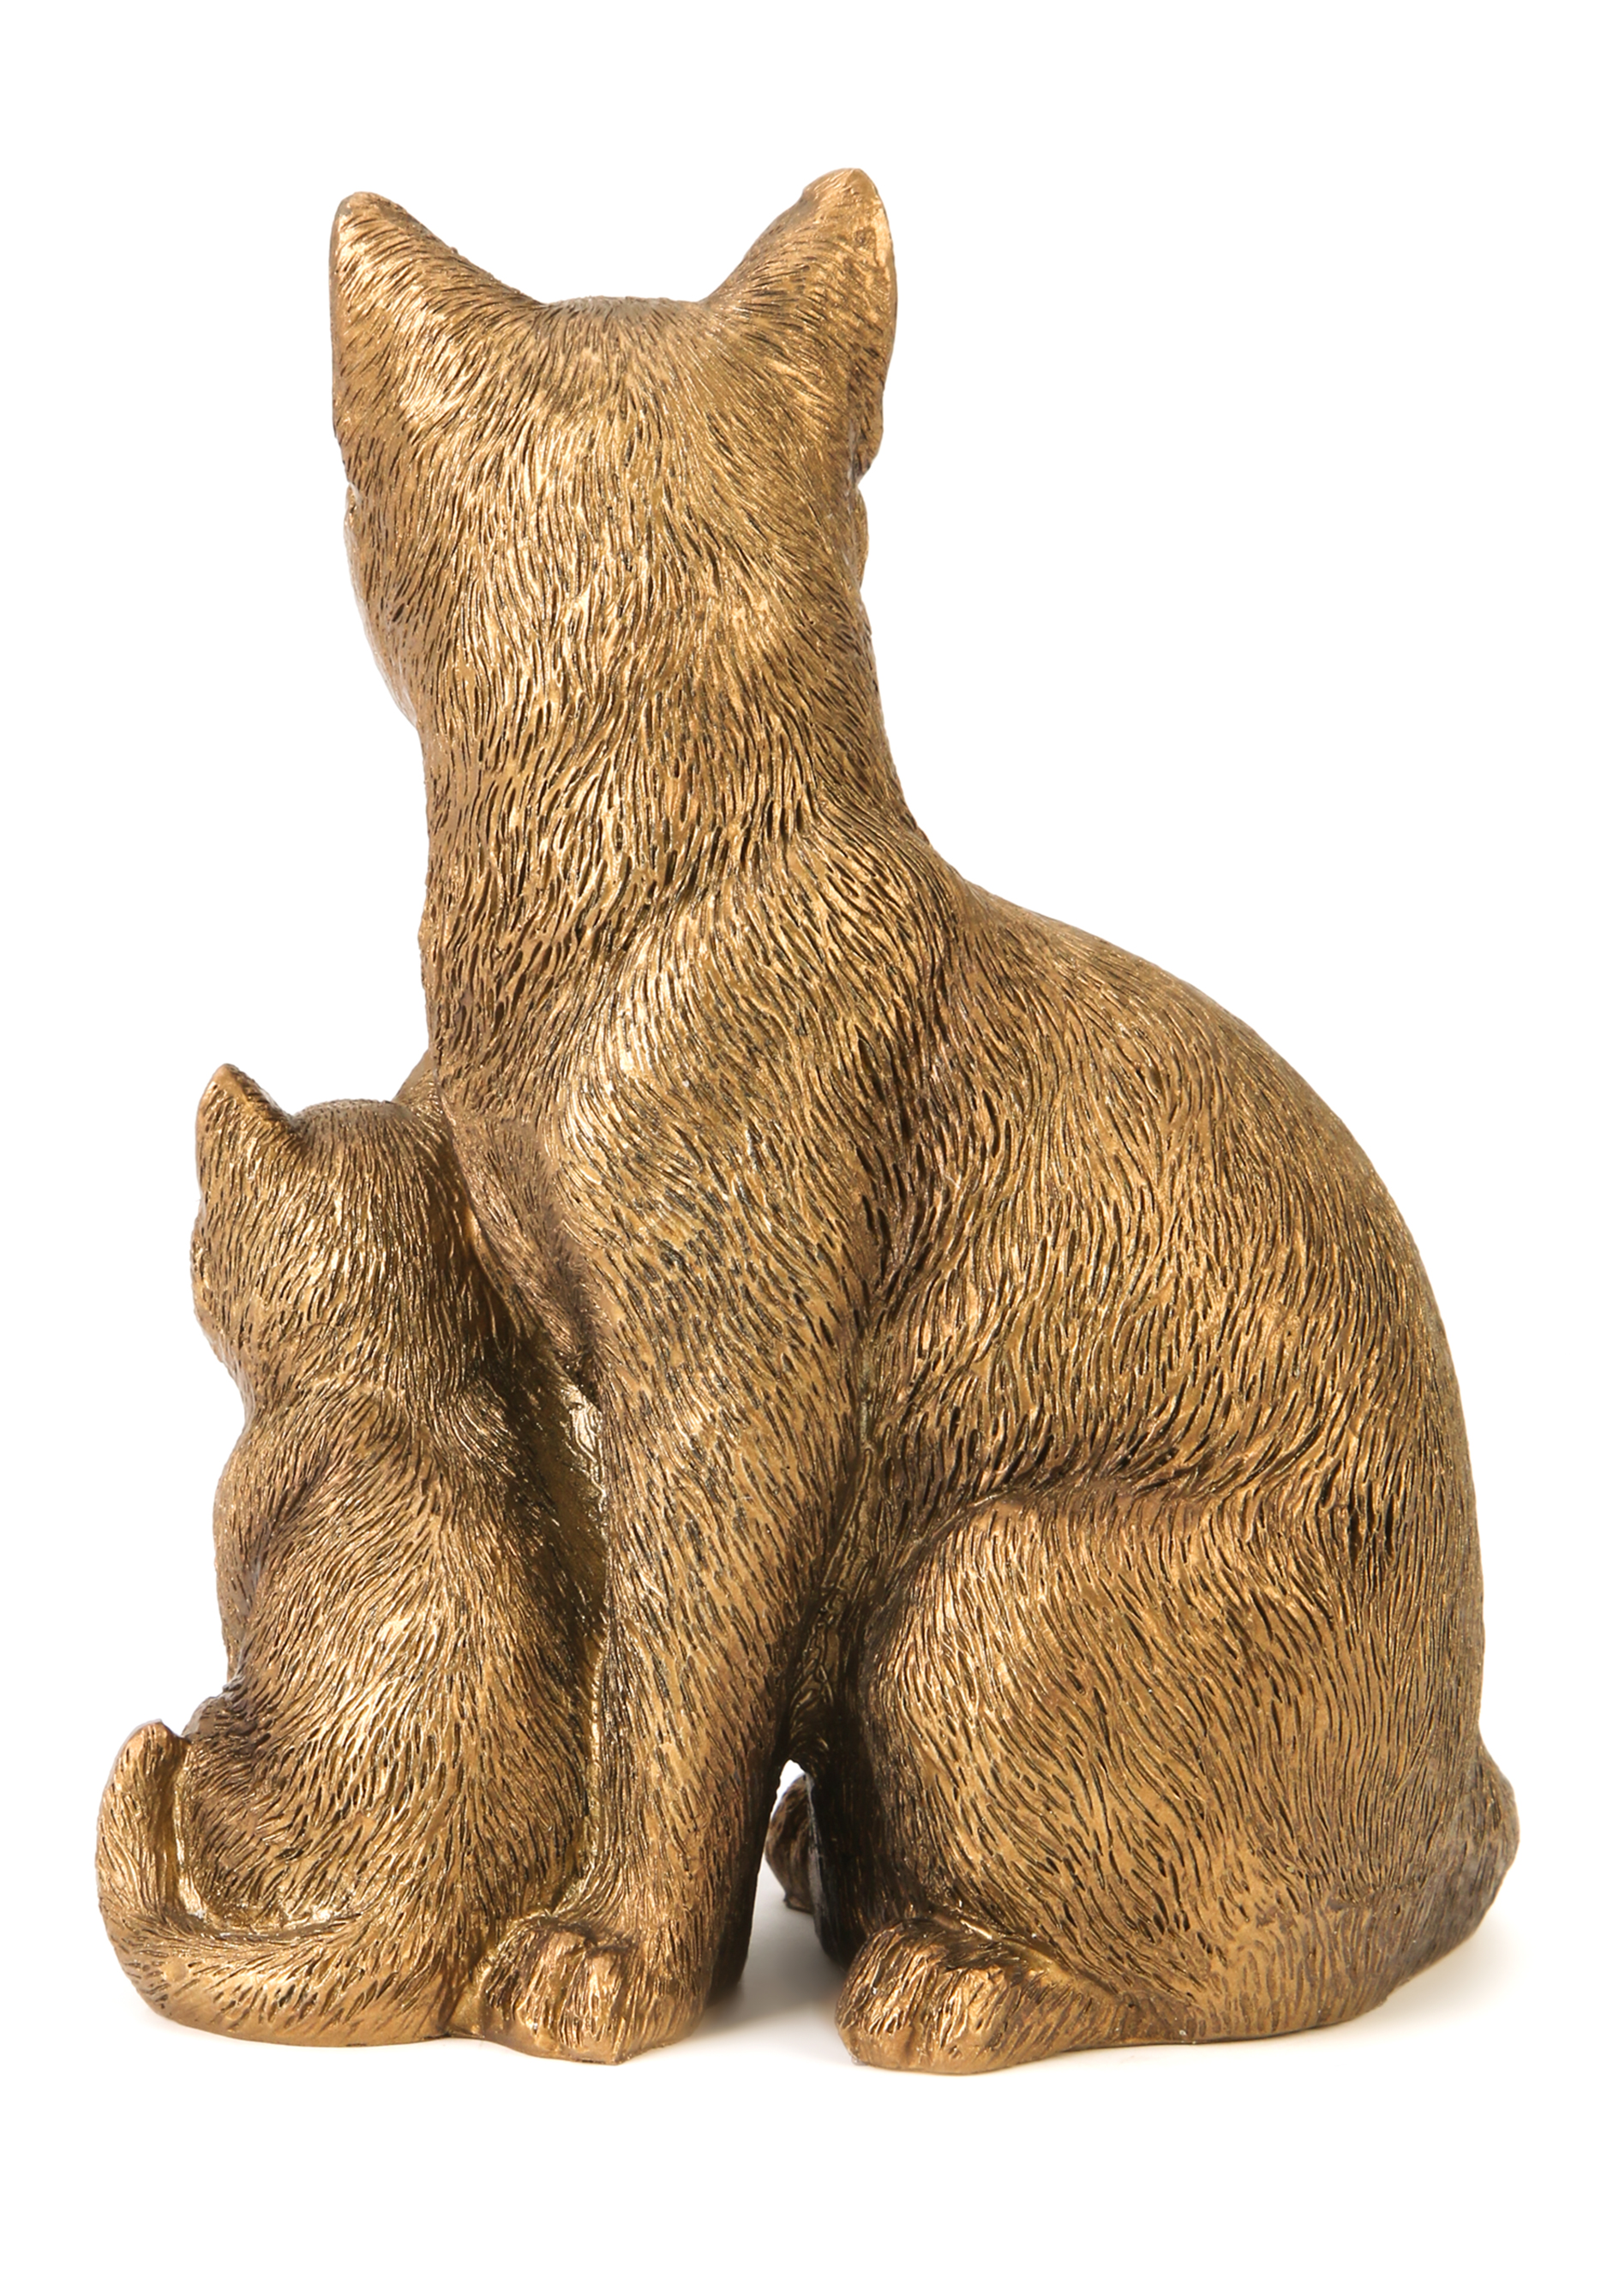 Статуэтка "Кошачий оберег" Lefard, цвет коричневый, размер 11*7 - фото 3